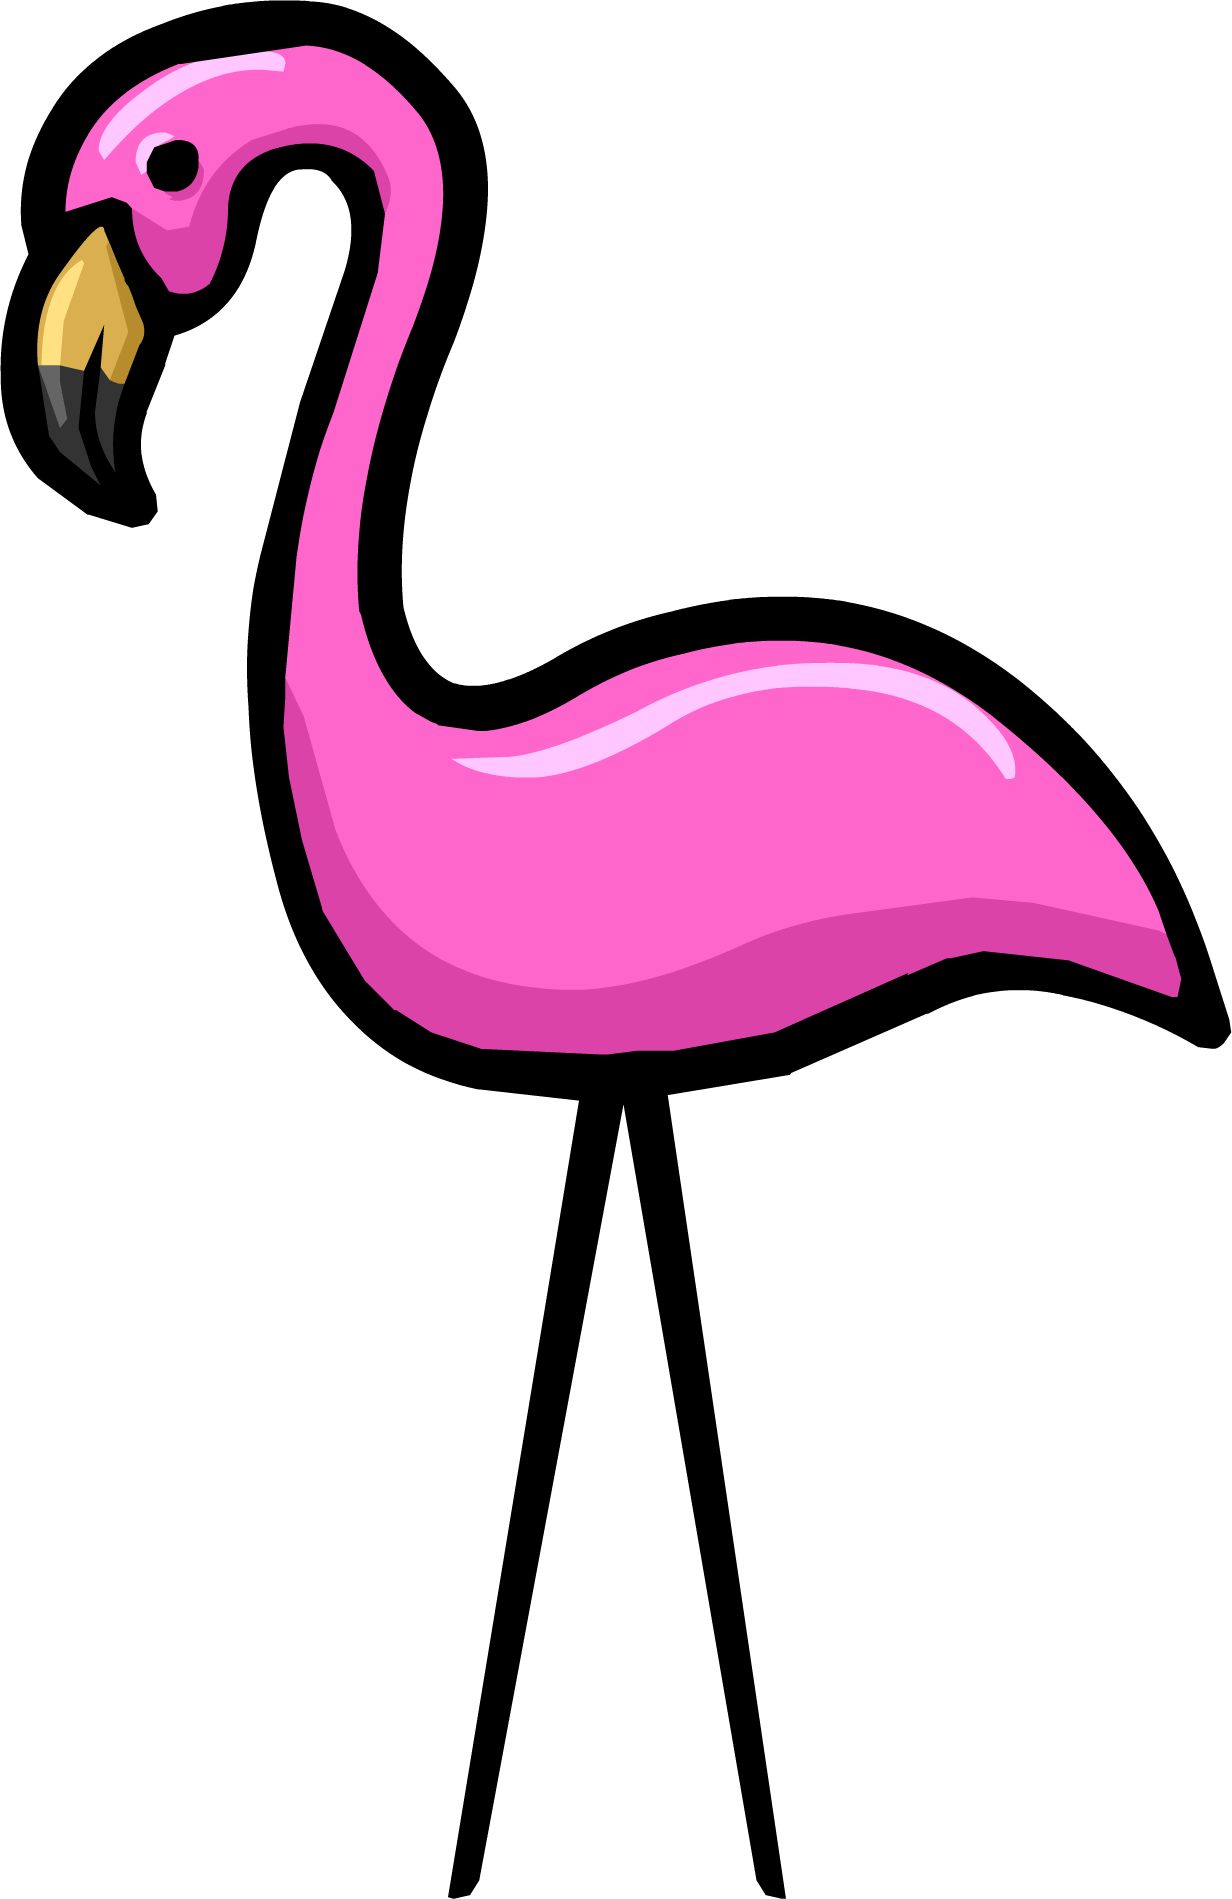 Image - Pink Flamingo.PNG | C